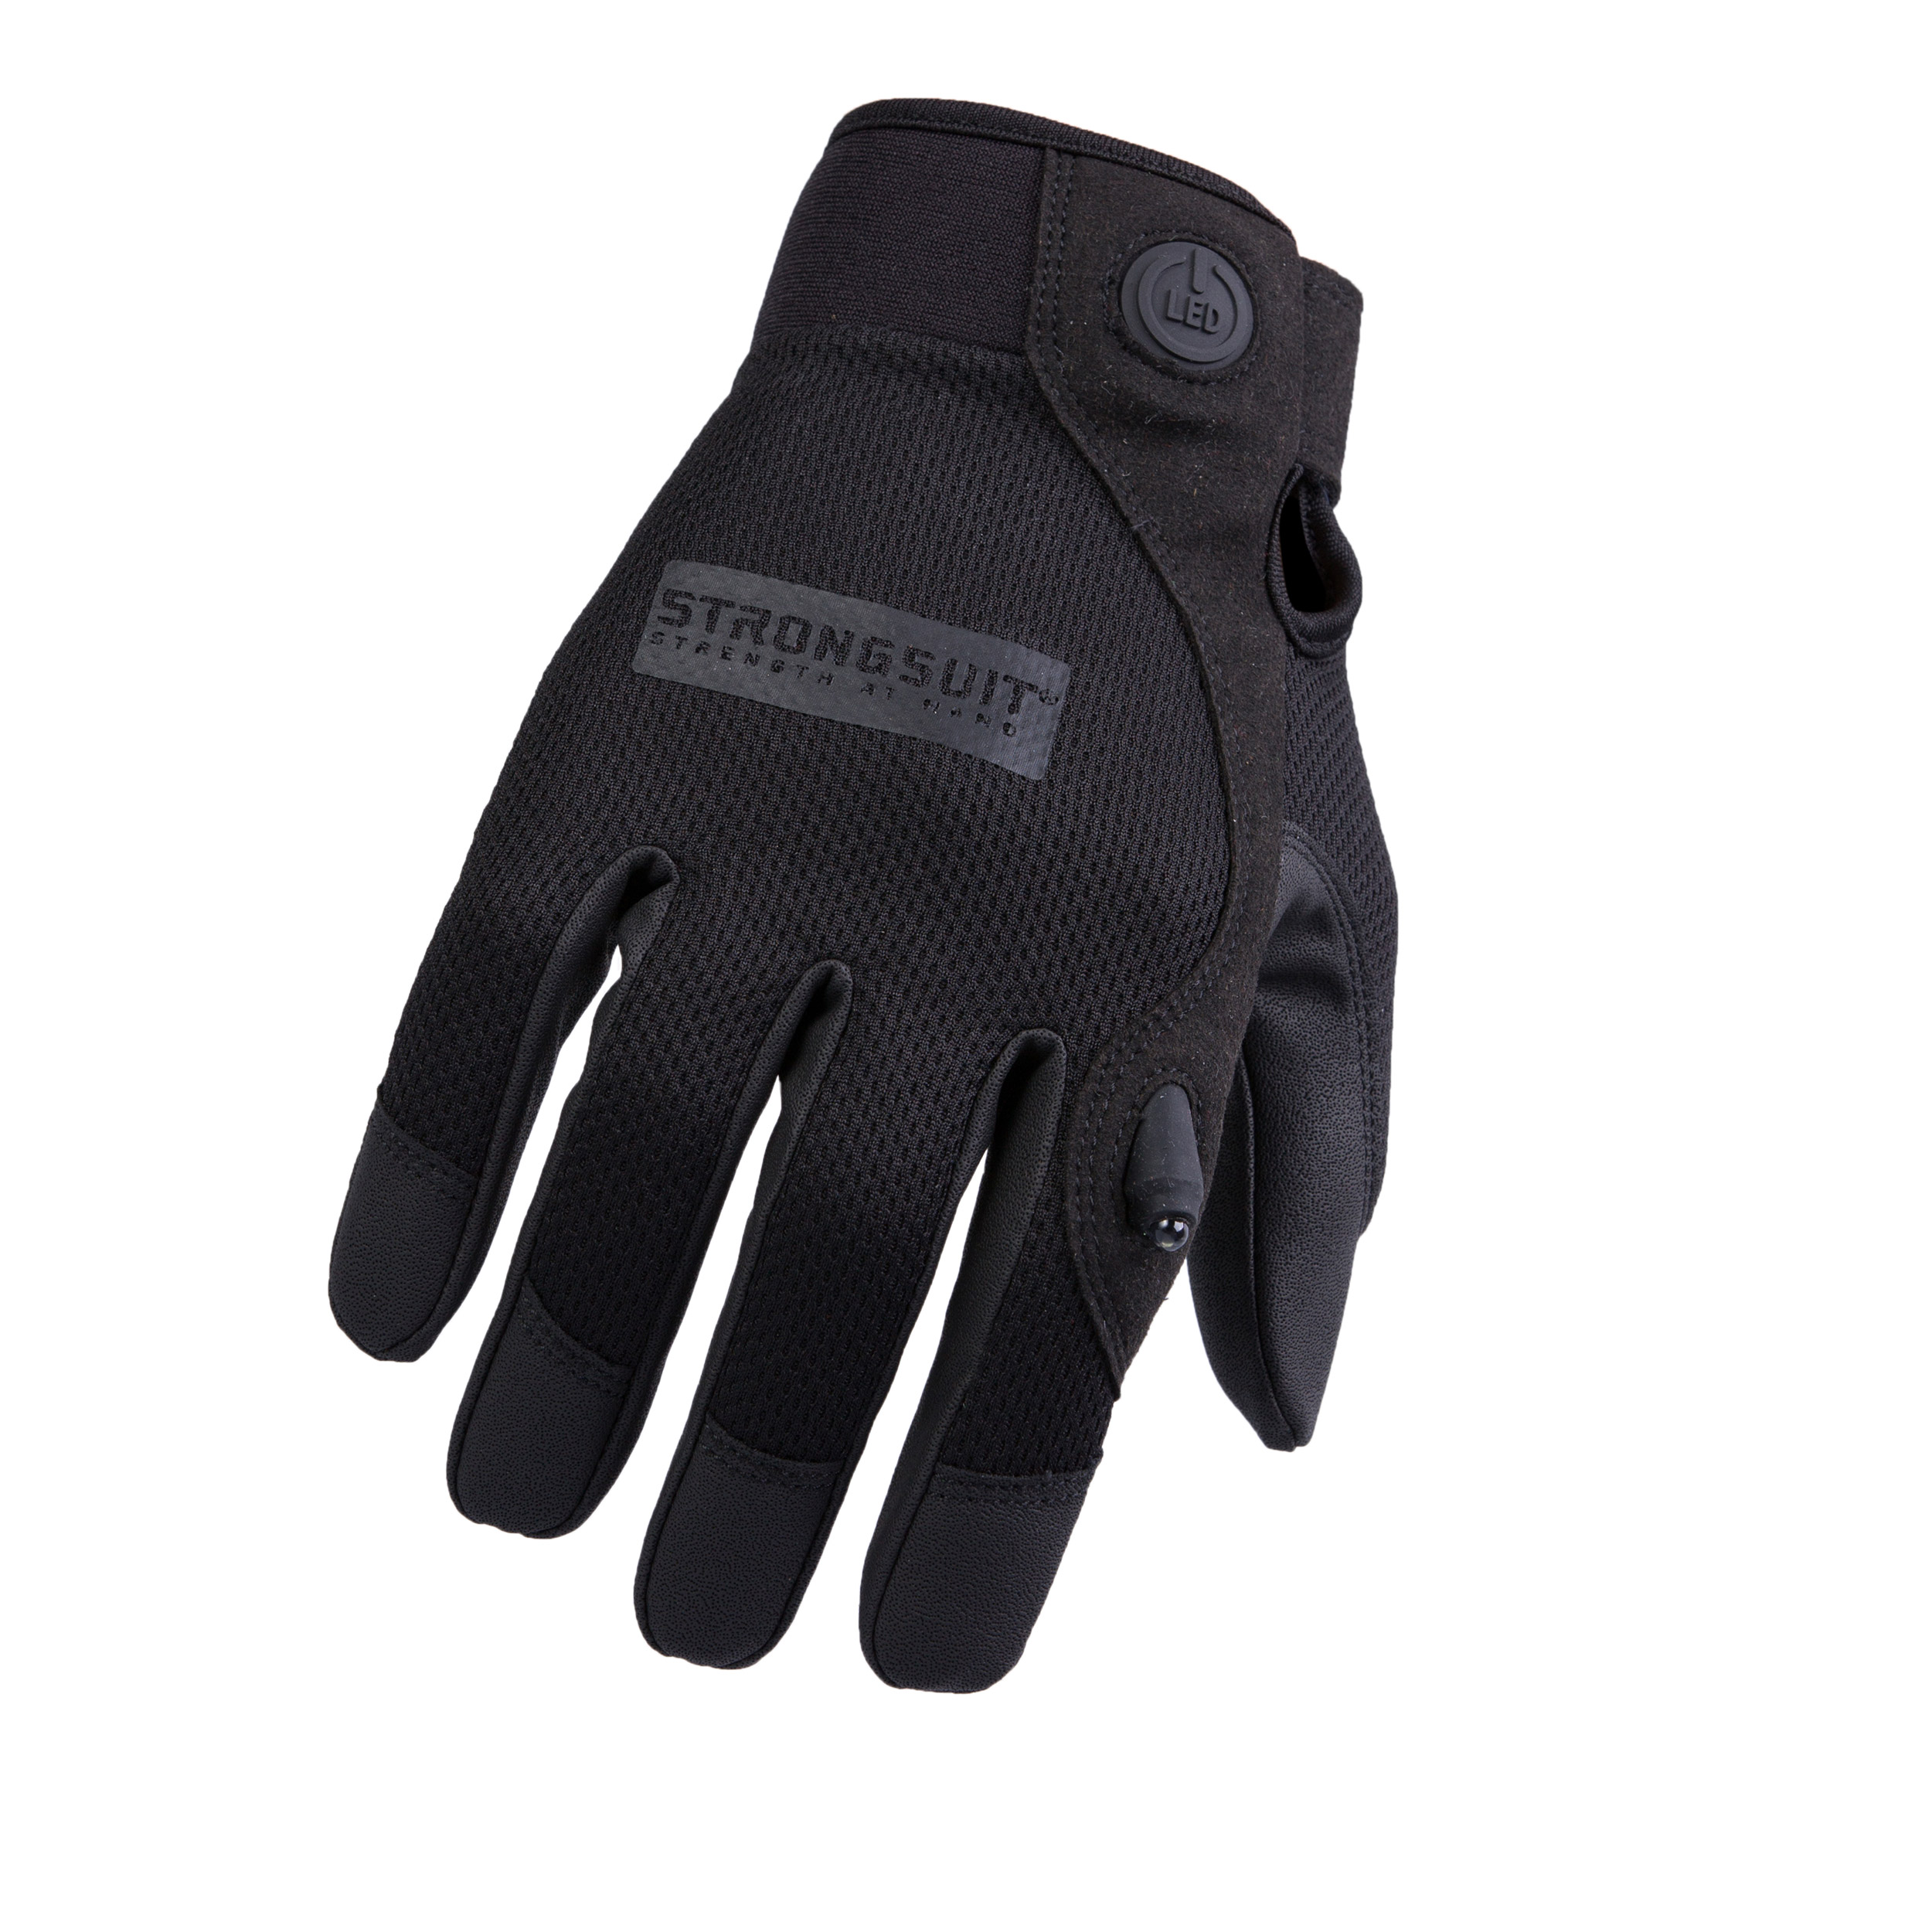 Second Skin Gloves Led Black Small